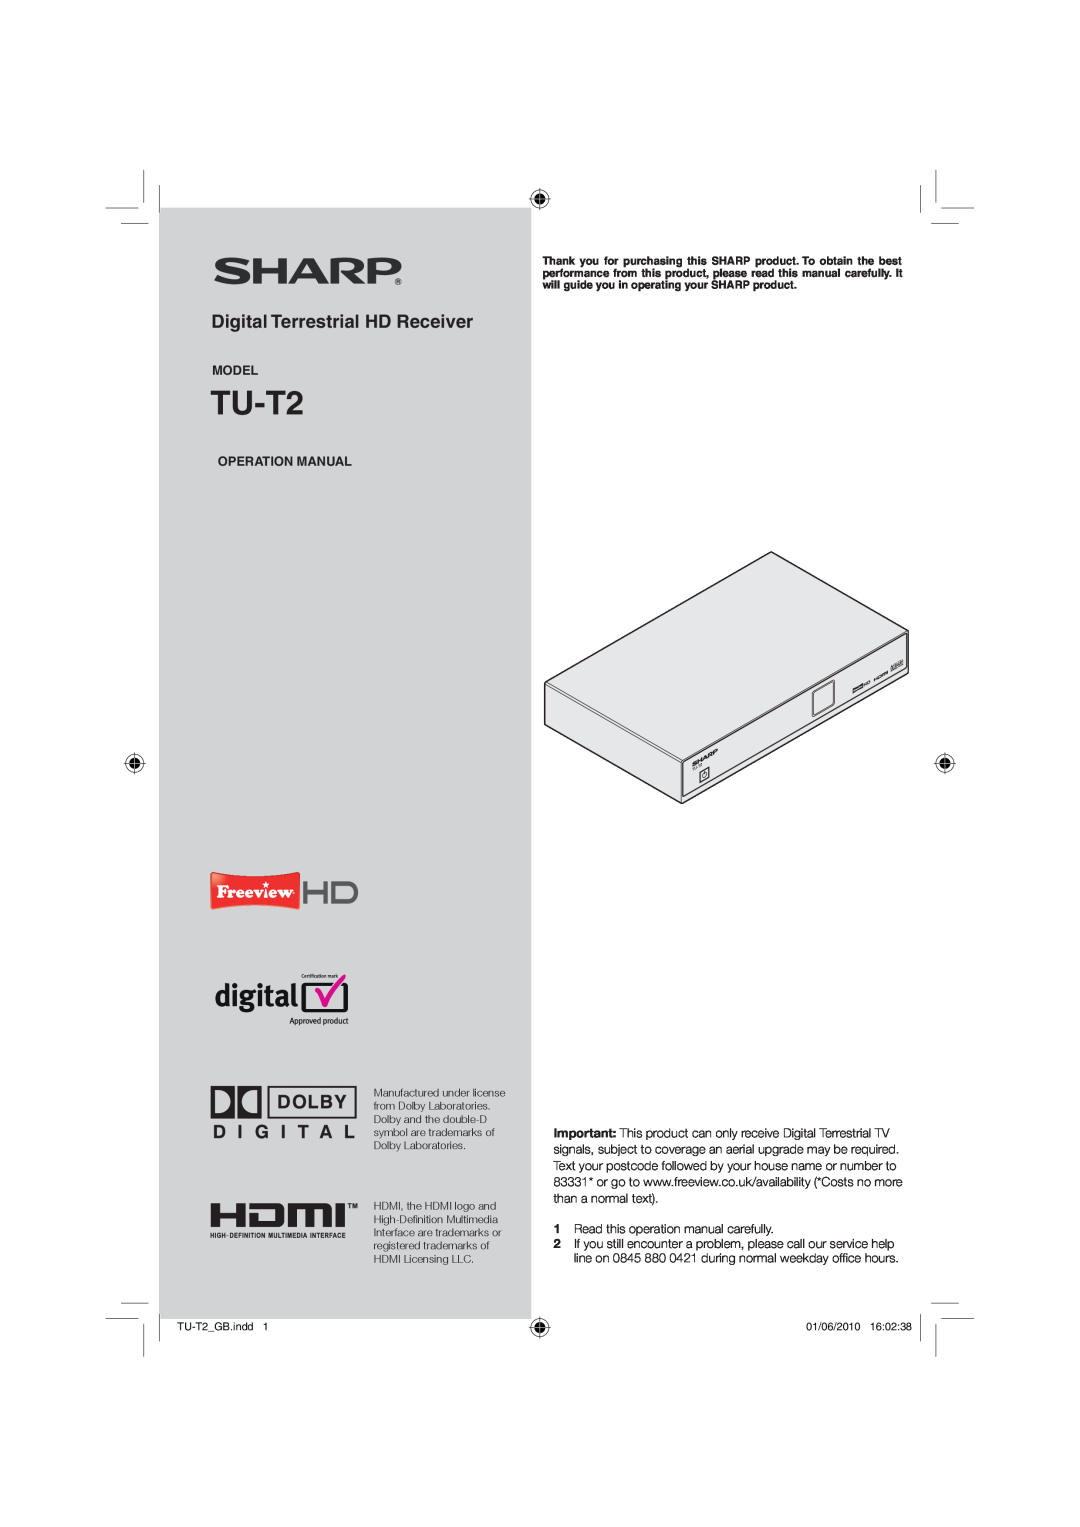 Sharp operation manual Digital Terrestrial HD Receiver, Model, Operation Manual, TU-T2GB.indd, 01/06/2010 